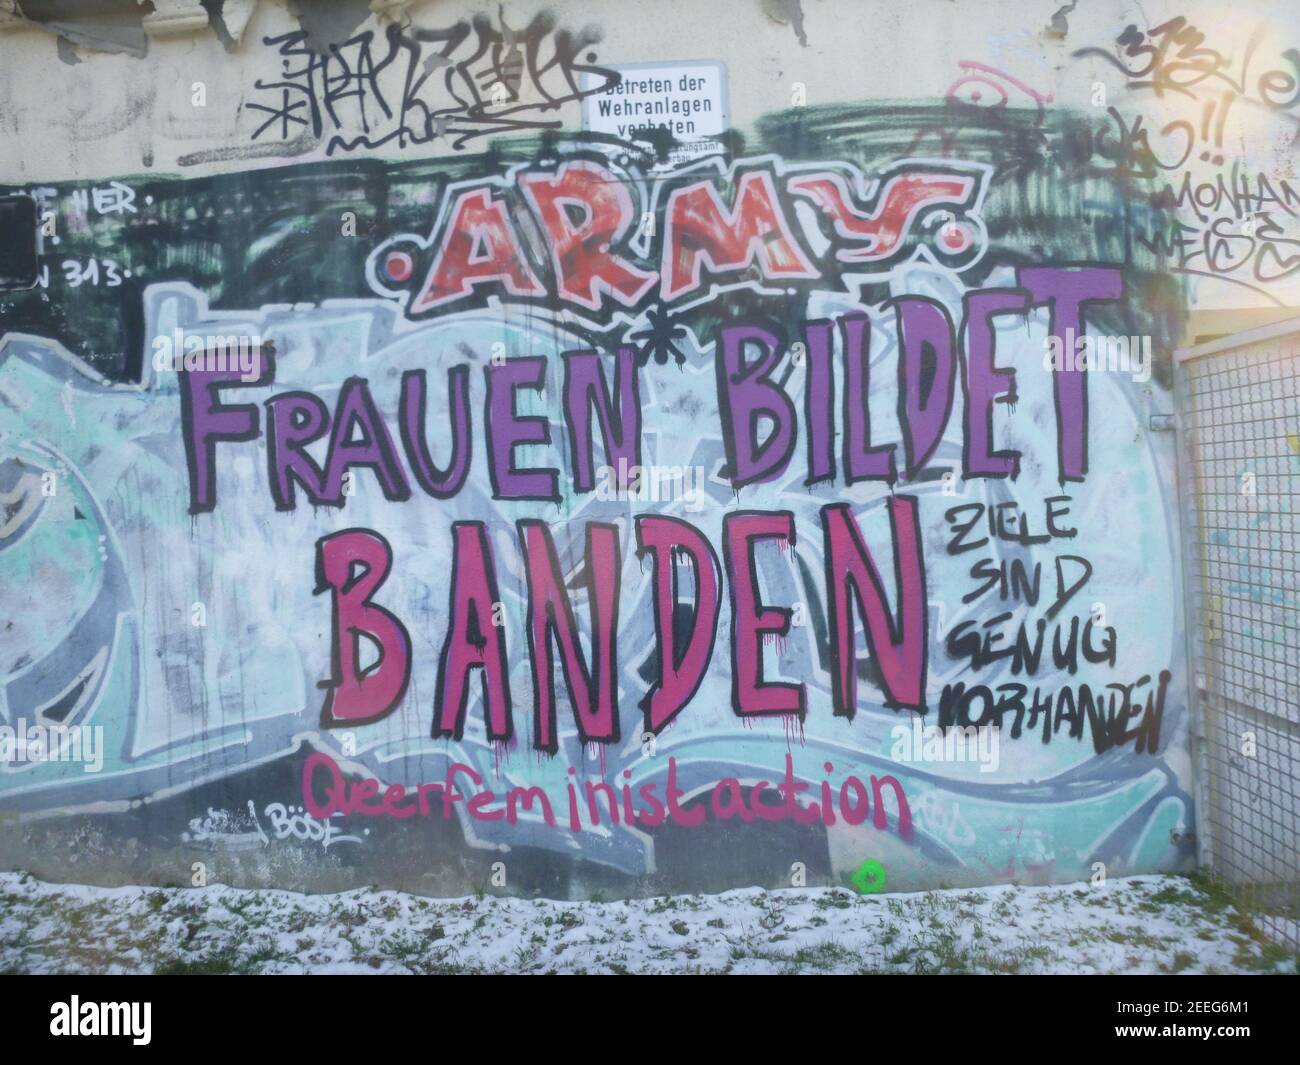 FRANKFUR, GERMANY - Feb 12, 2021: A feminist graffiti in Frankfurt. It means 'Women, form gangs!'. A radical call for the movement. Legendary Grafitti Stock Photo